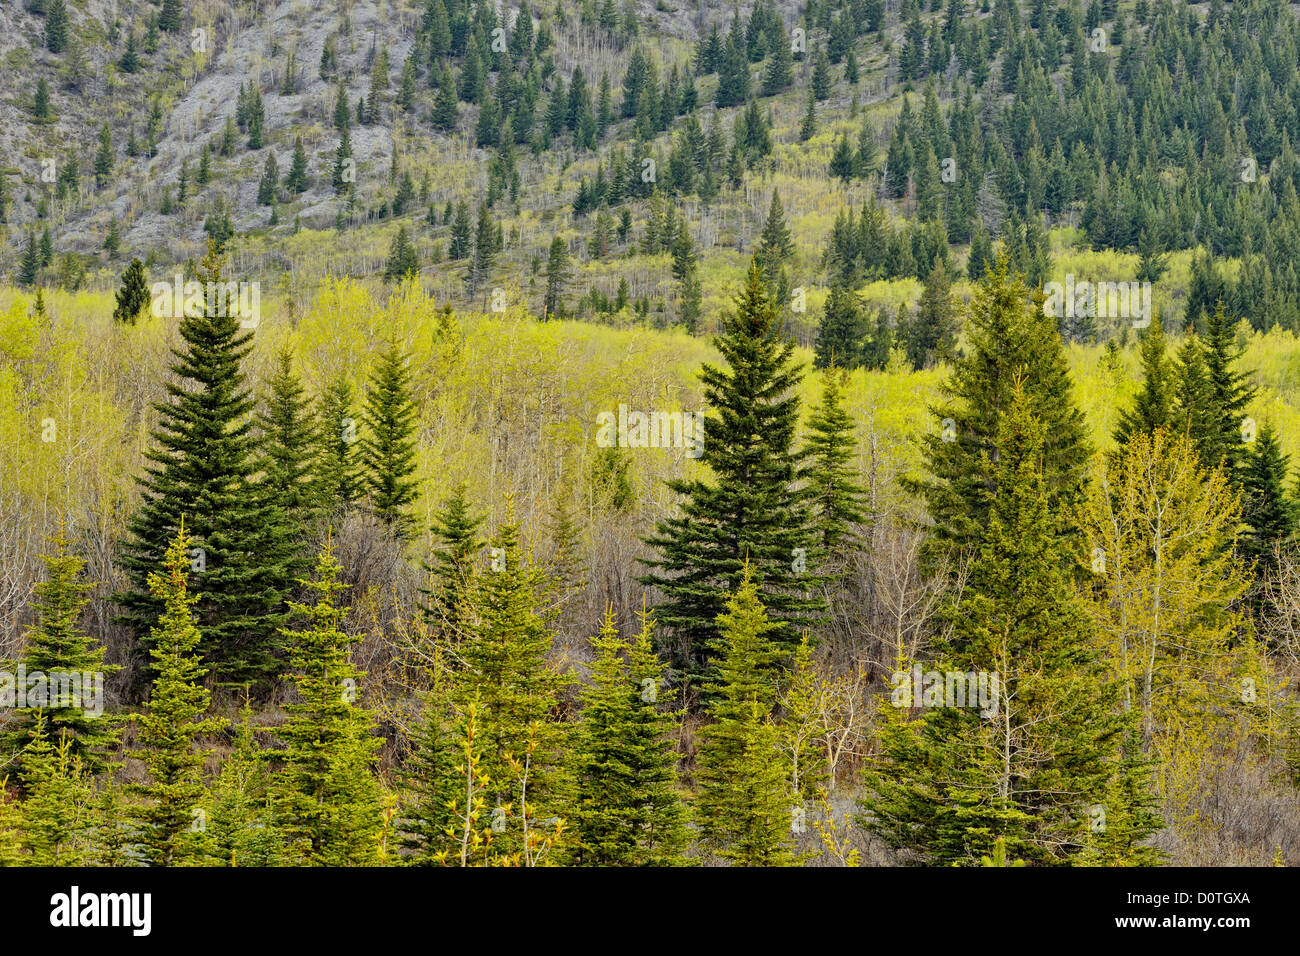 Aspen forests in the Spray Lakes Valley, Kananaskis country, Alberta, Canada Stock Photo